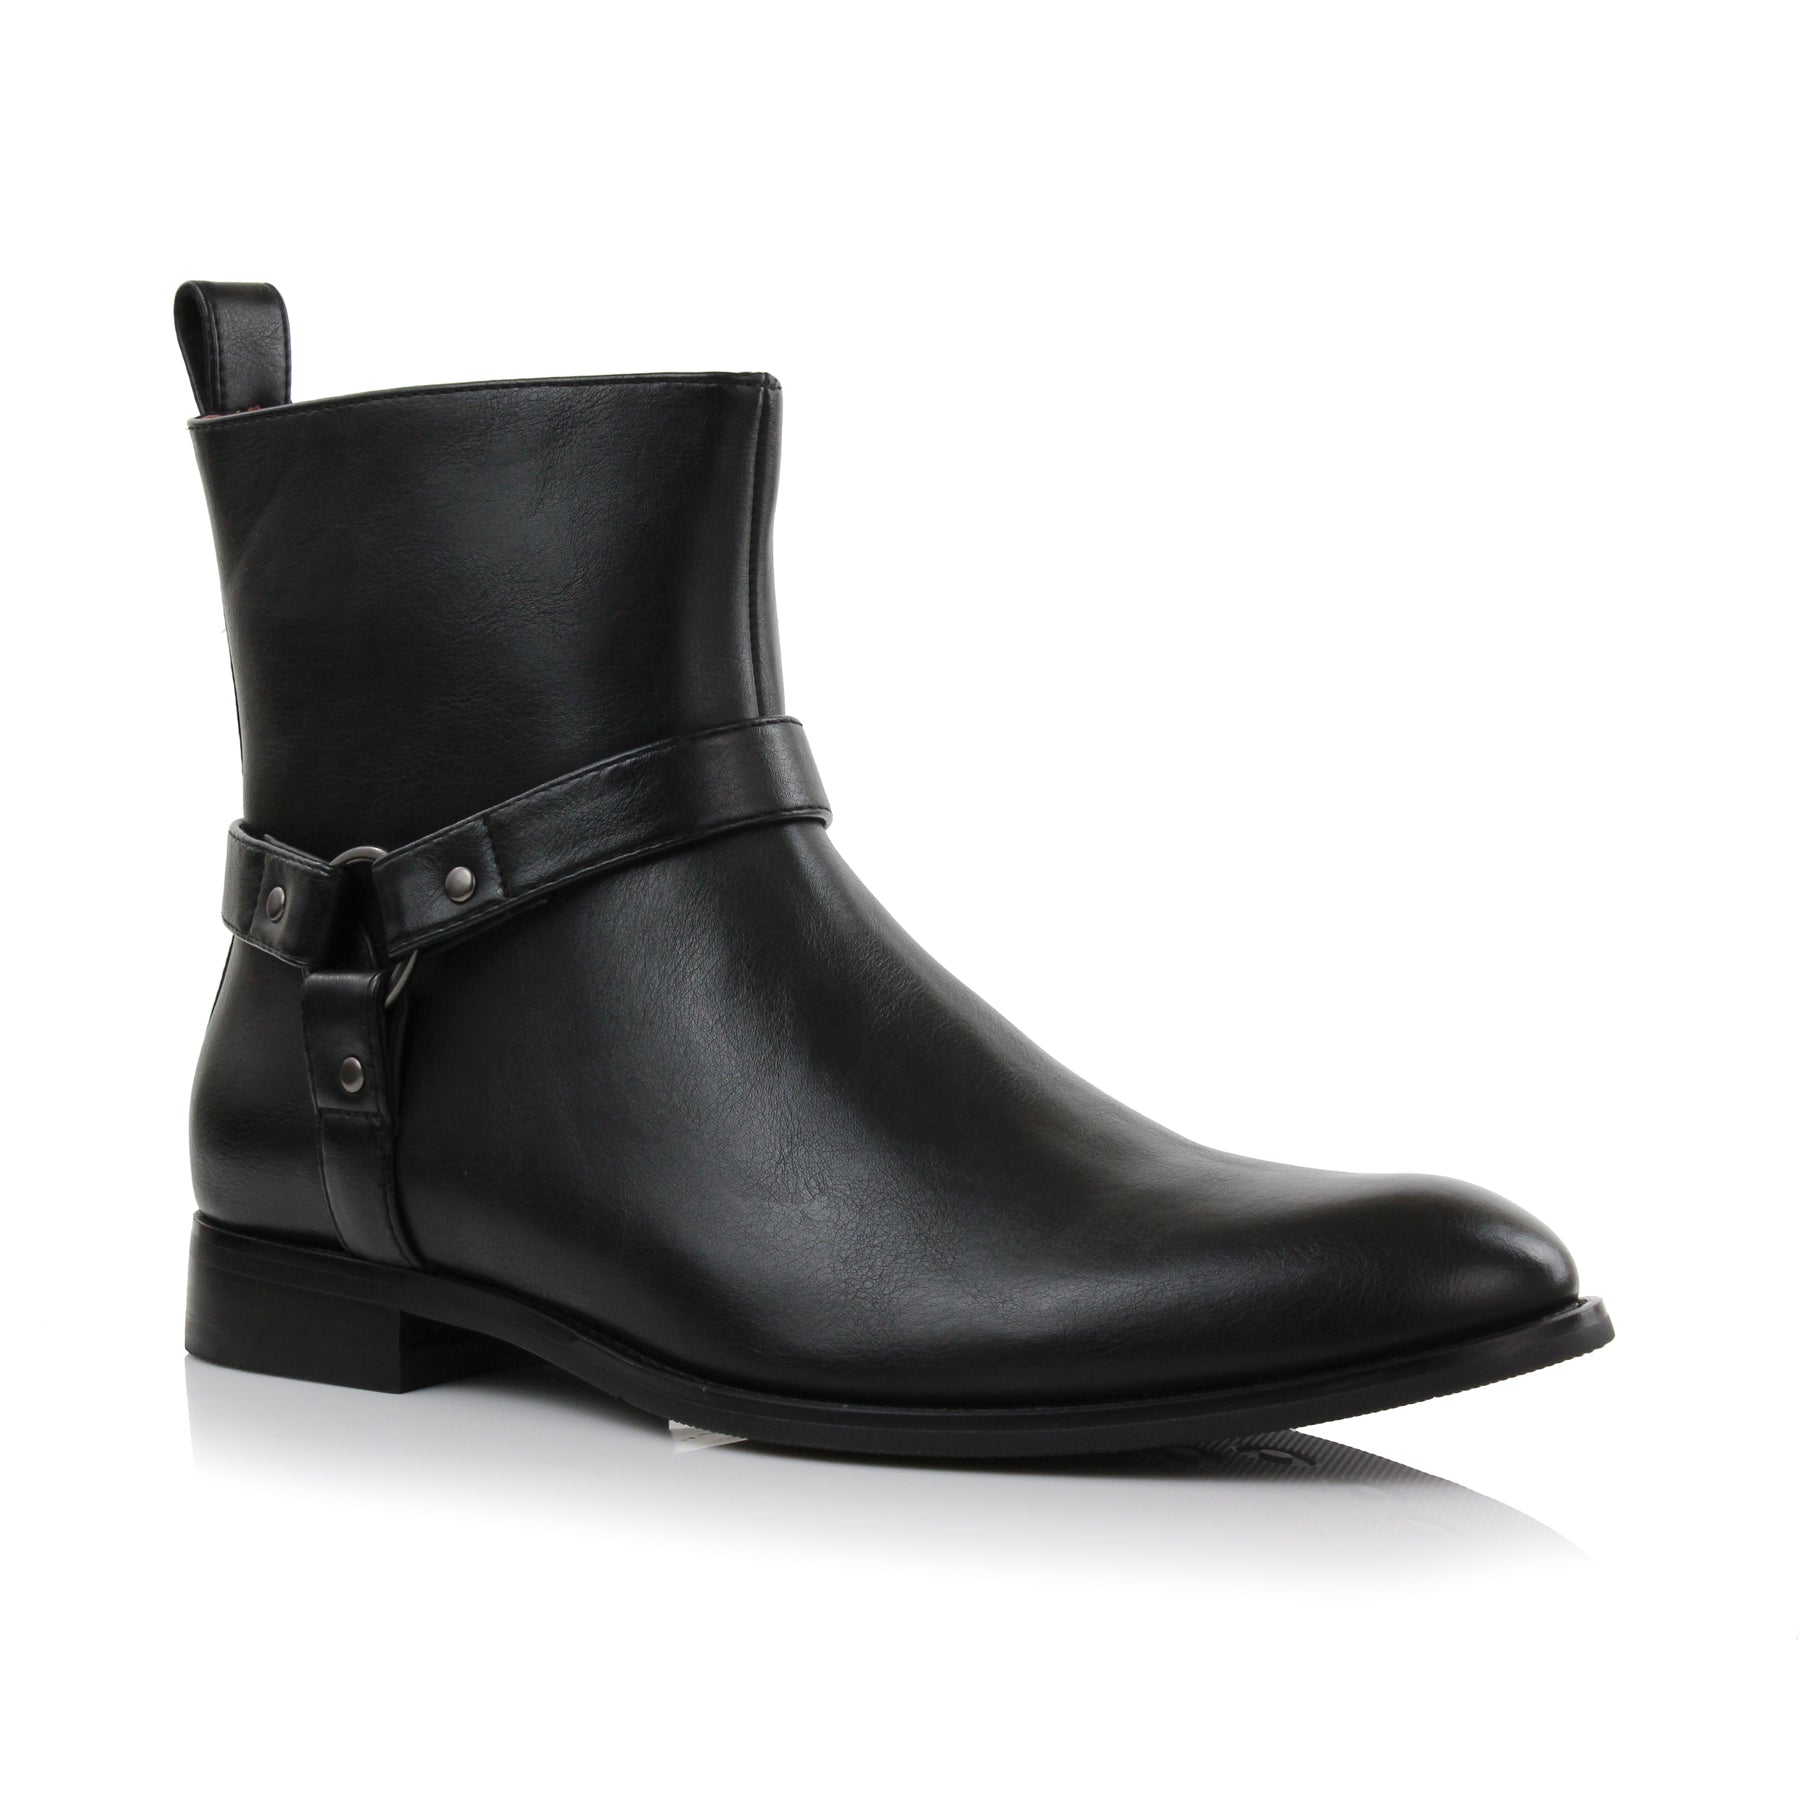 Modern Western Ankle Boots | Rhett by Polar Fox | Conal Footwear | Main Angle View